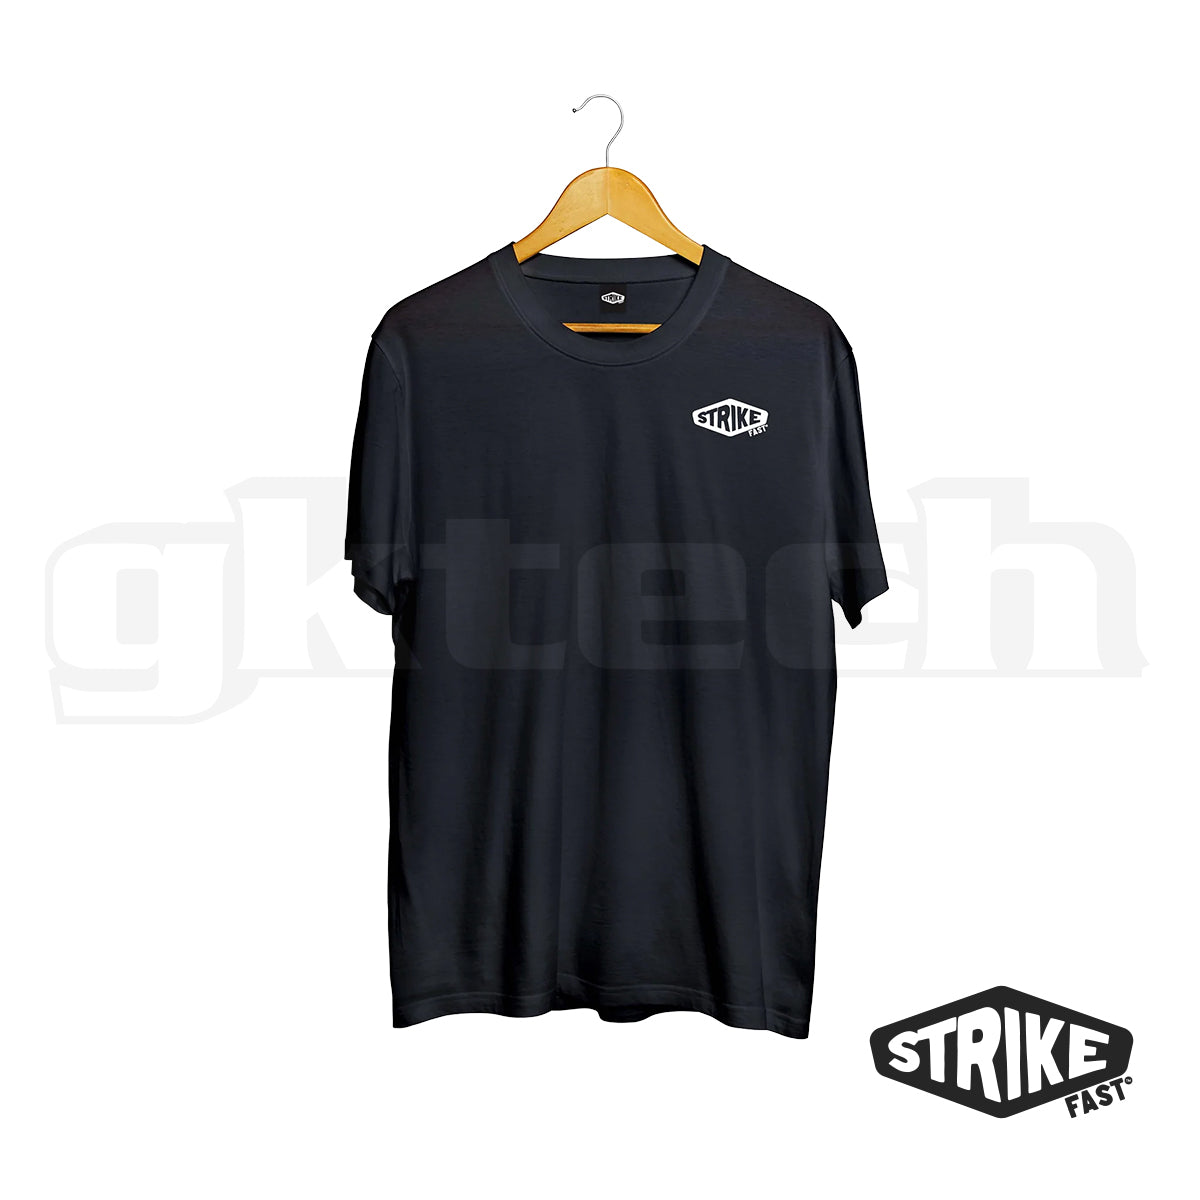 Strike Fast - strike hard - crew neck T-shirts